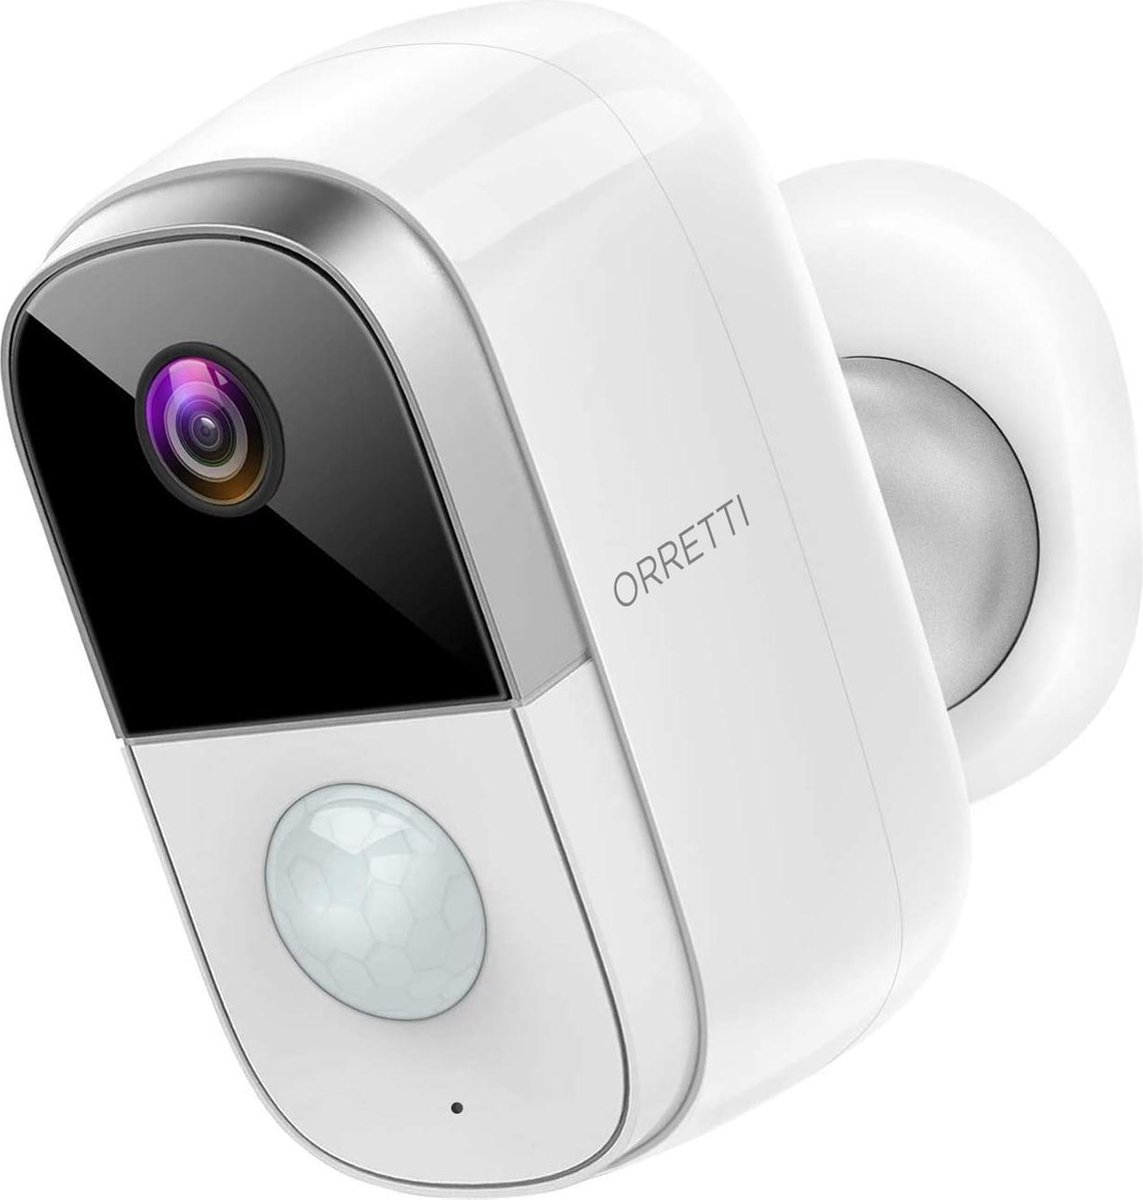 Orretti® X14 - Beveiligingscamera op batterij - Draadloze Camera - Bewakingscamera - Human Detection - IP65 Waterbestendig - Orretti